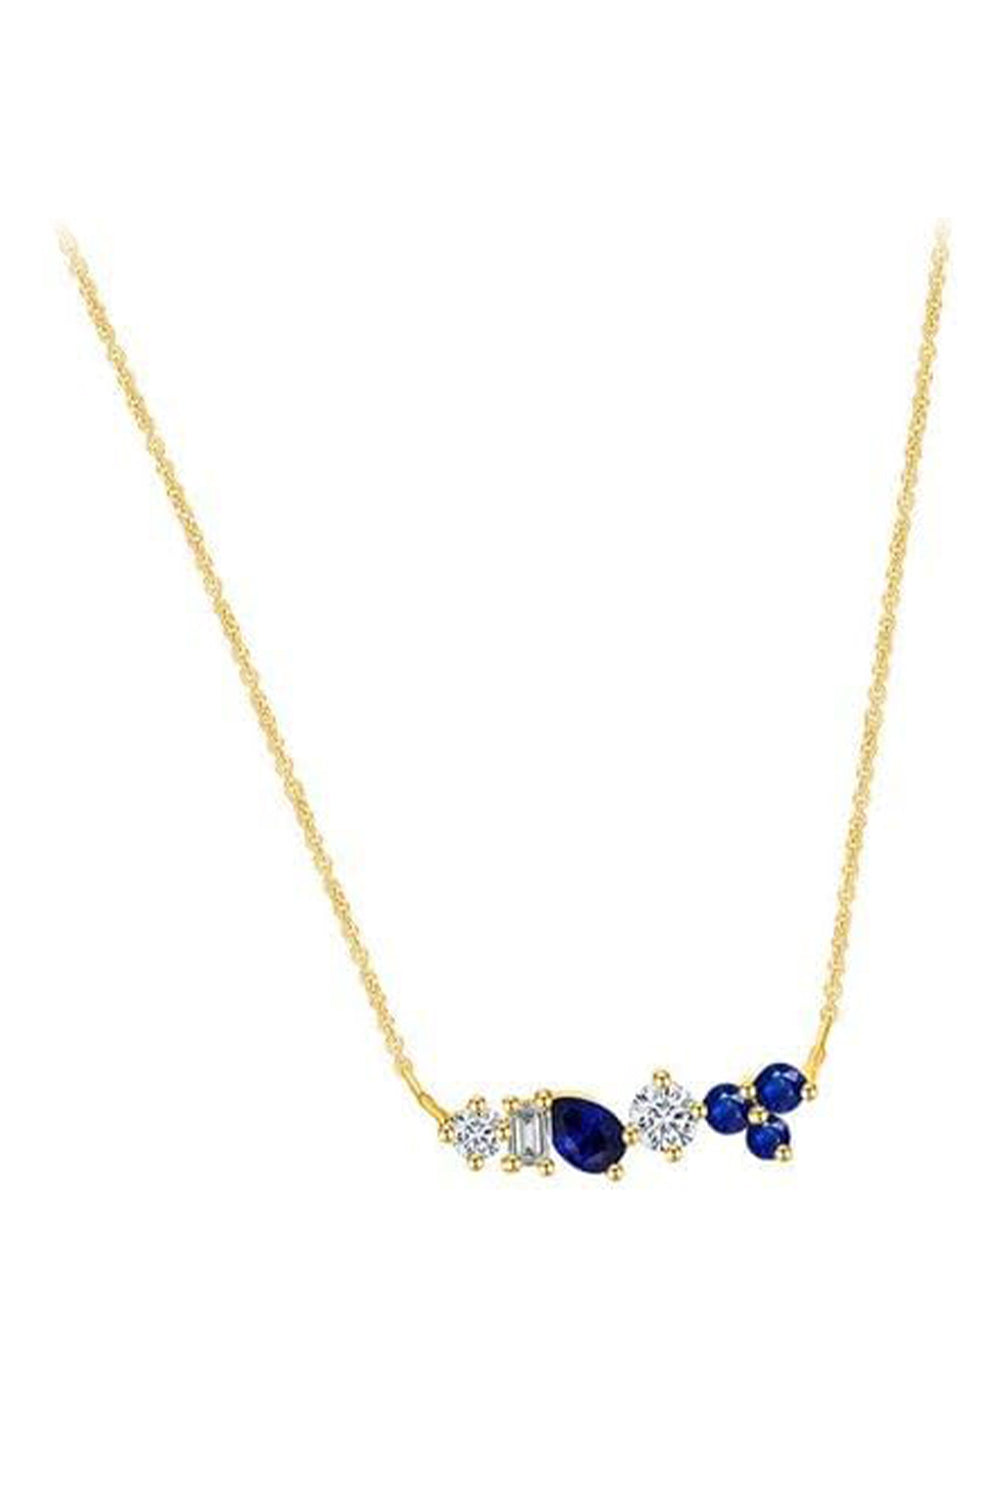 Yellow Gold Color Blue Sapphire Gemstone Multi Shape Pendant Necklace 